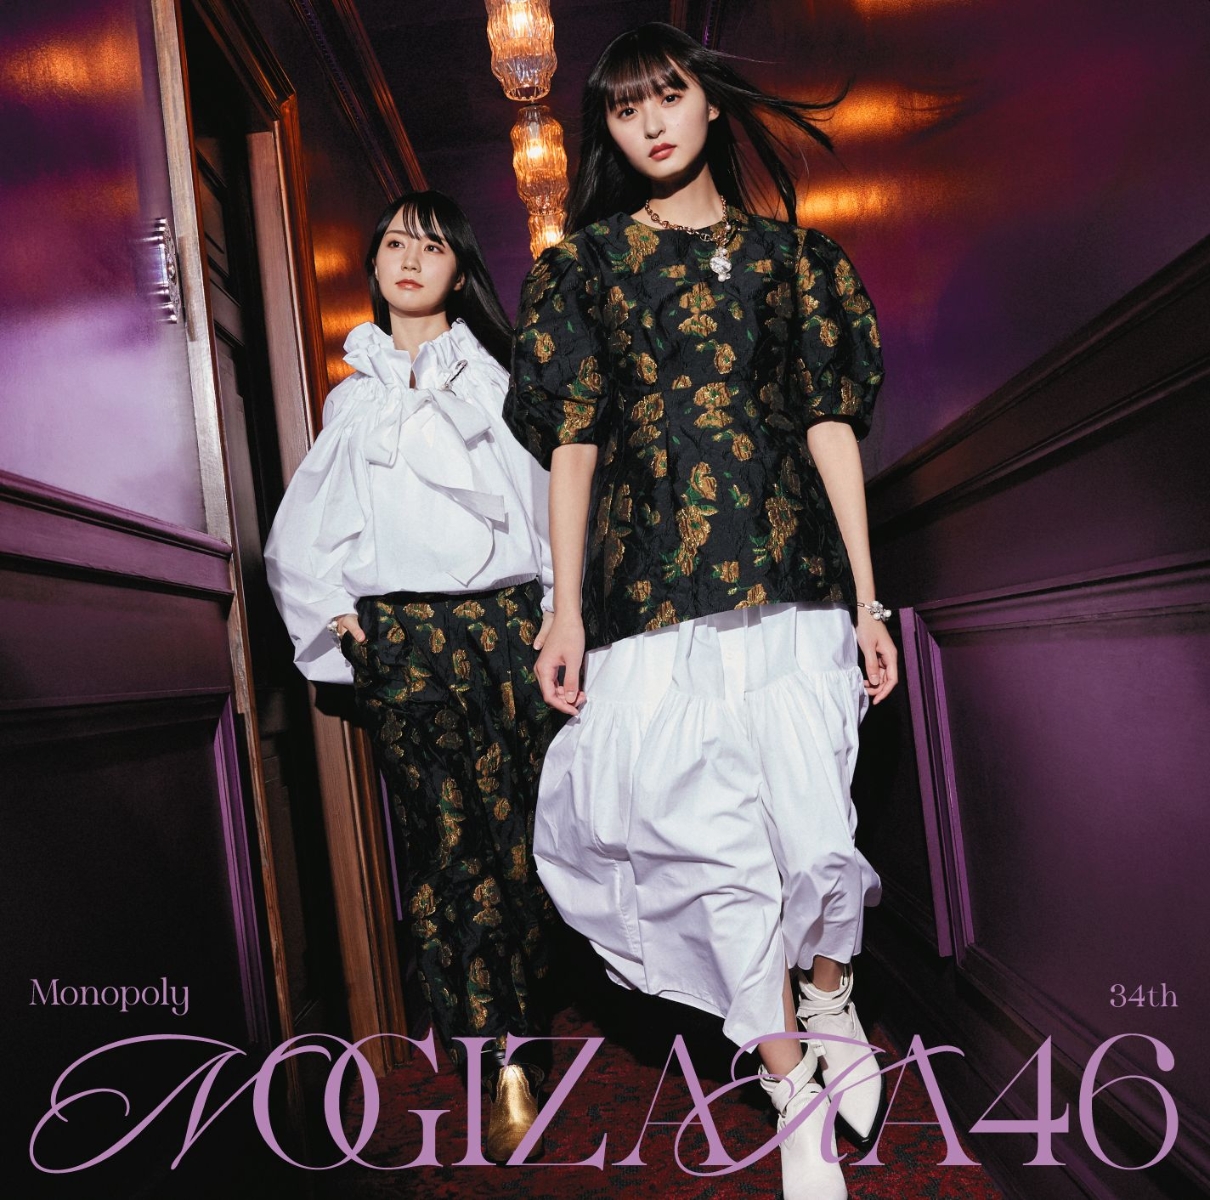 Nogizaka46 — Monopoly cover artwork